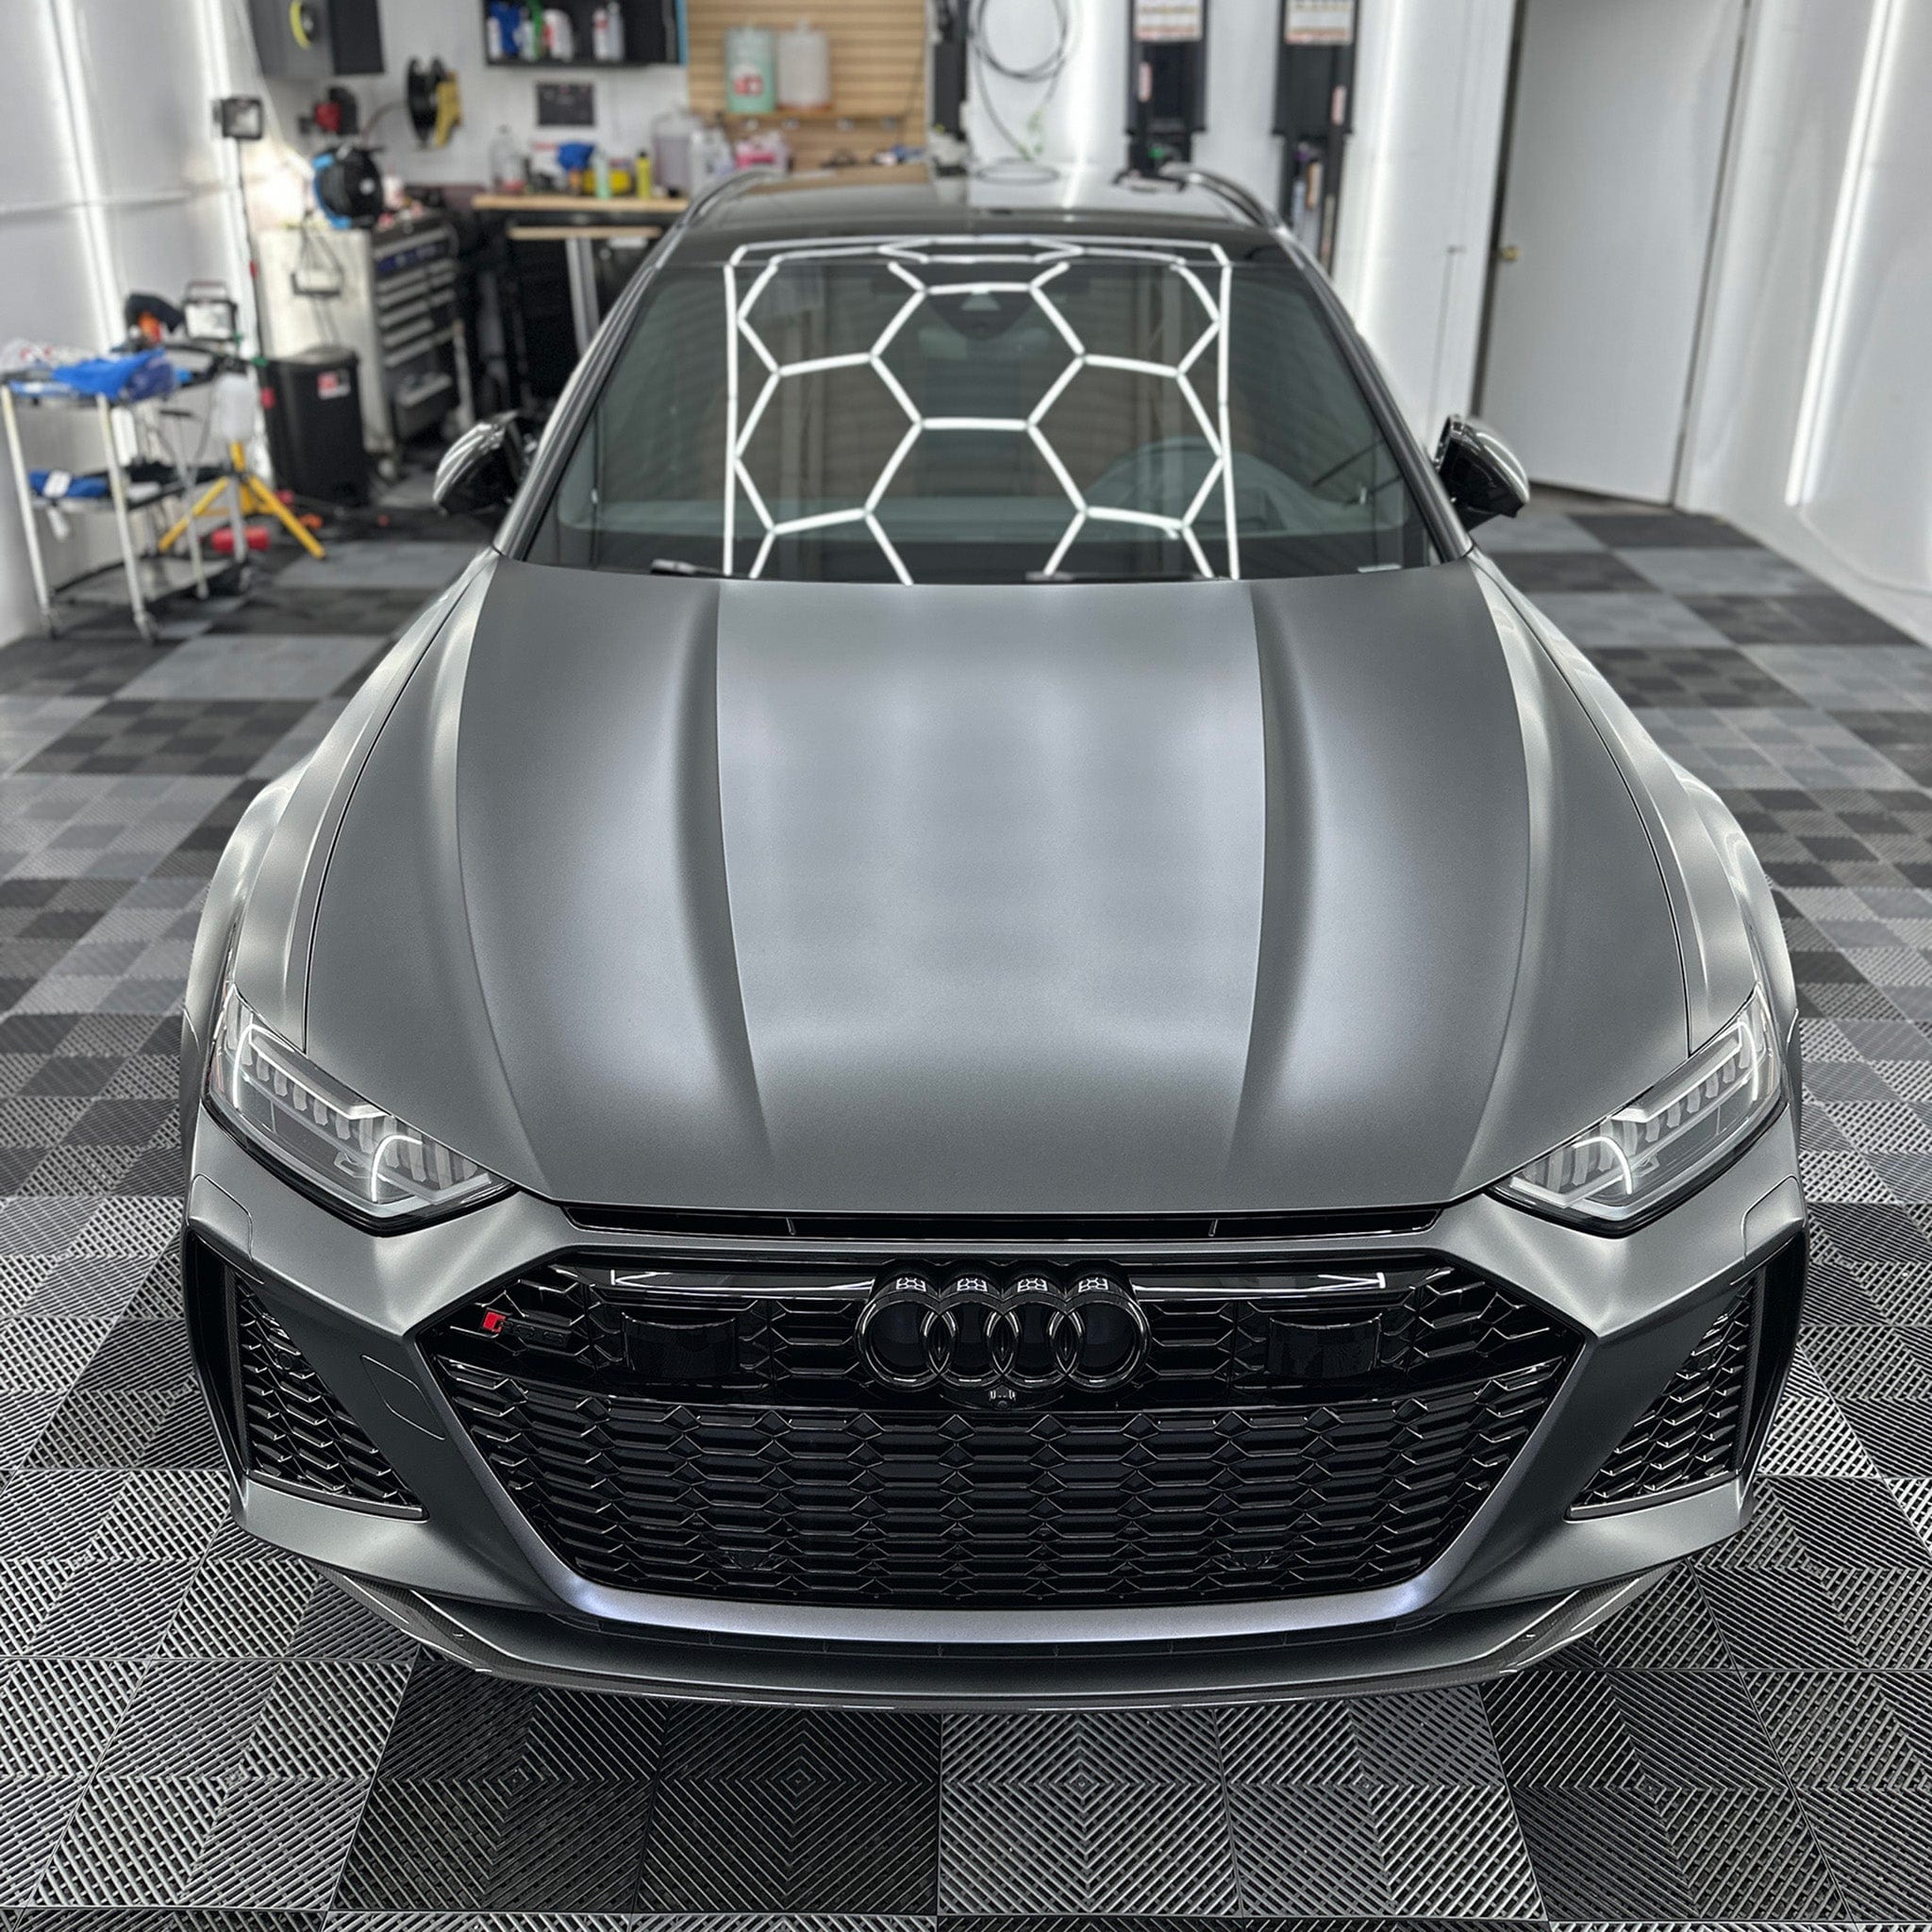 Audi RS6 Halo Wrap Ceramic Coating - Martin Auto Detailing